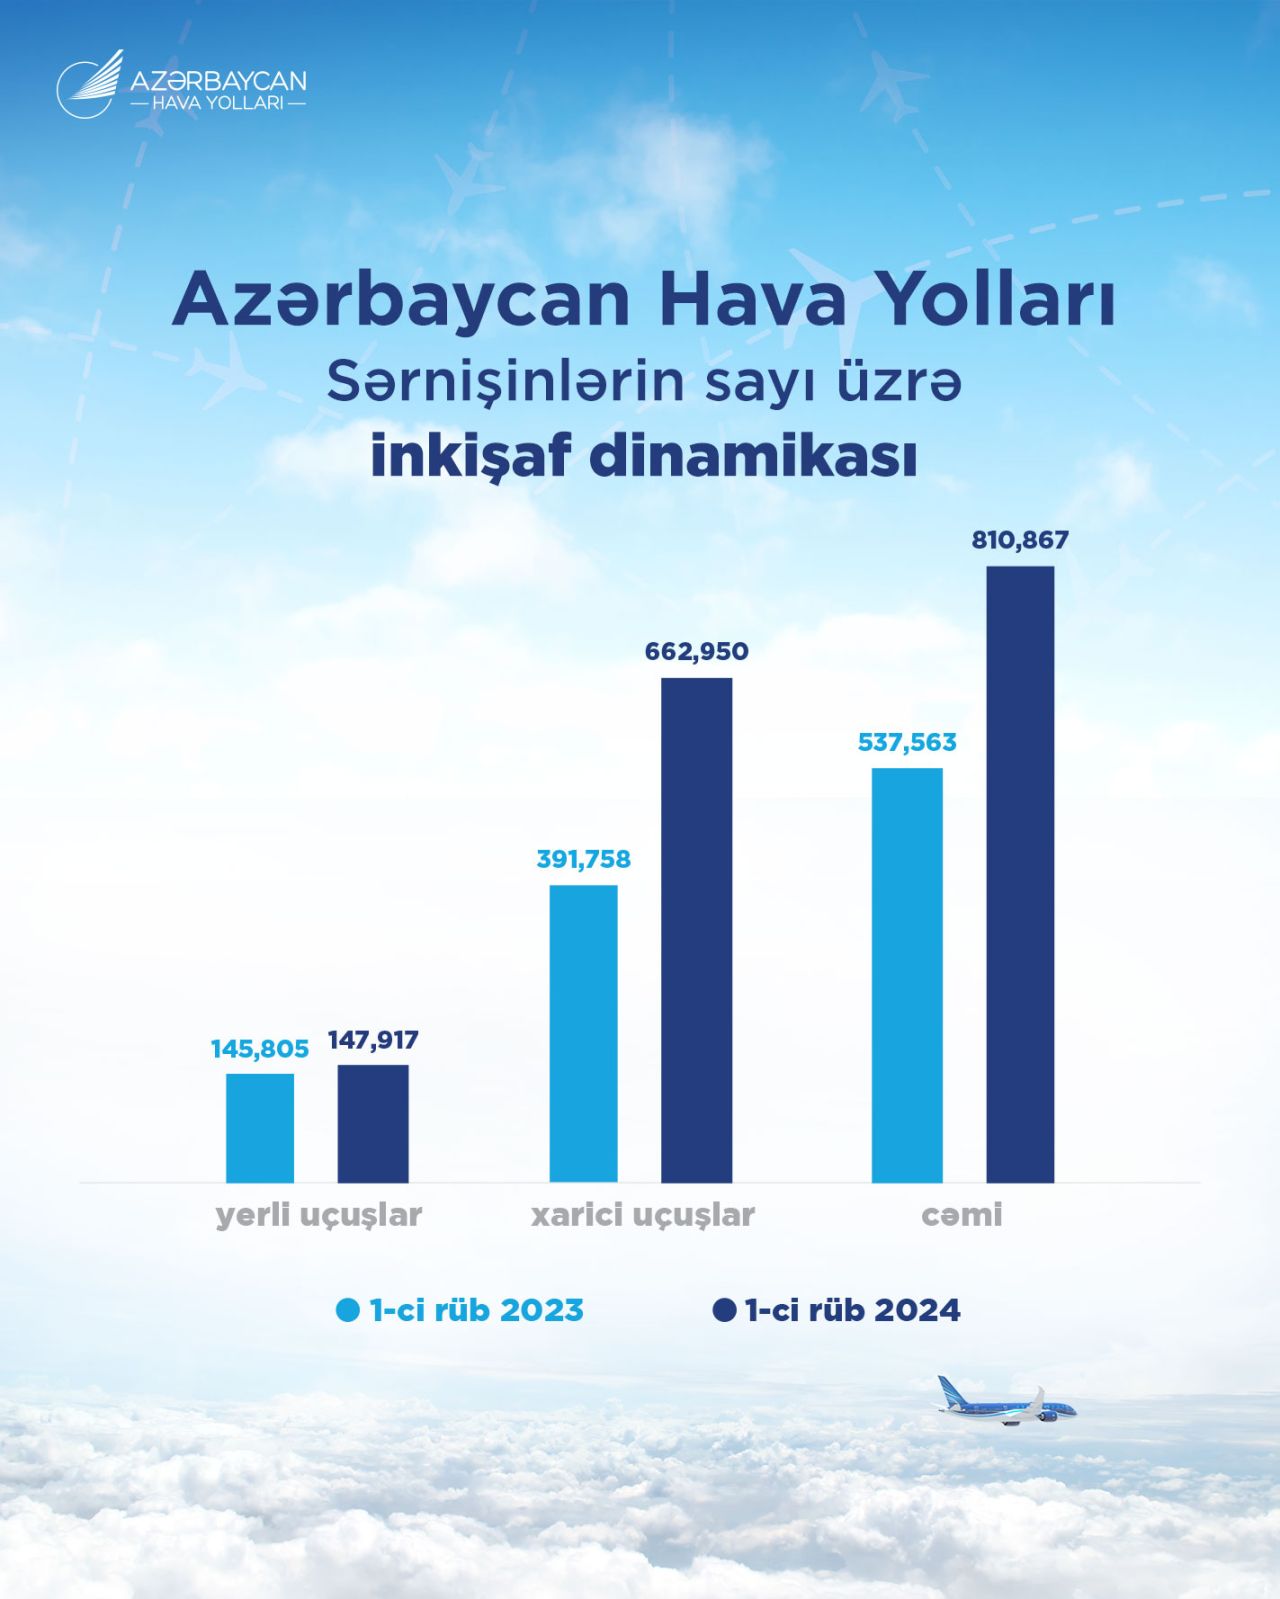 Azərbaycan Hava Yolları'nın yükselişi 24 Nisan 2024